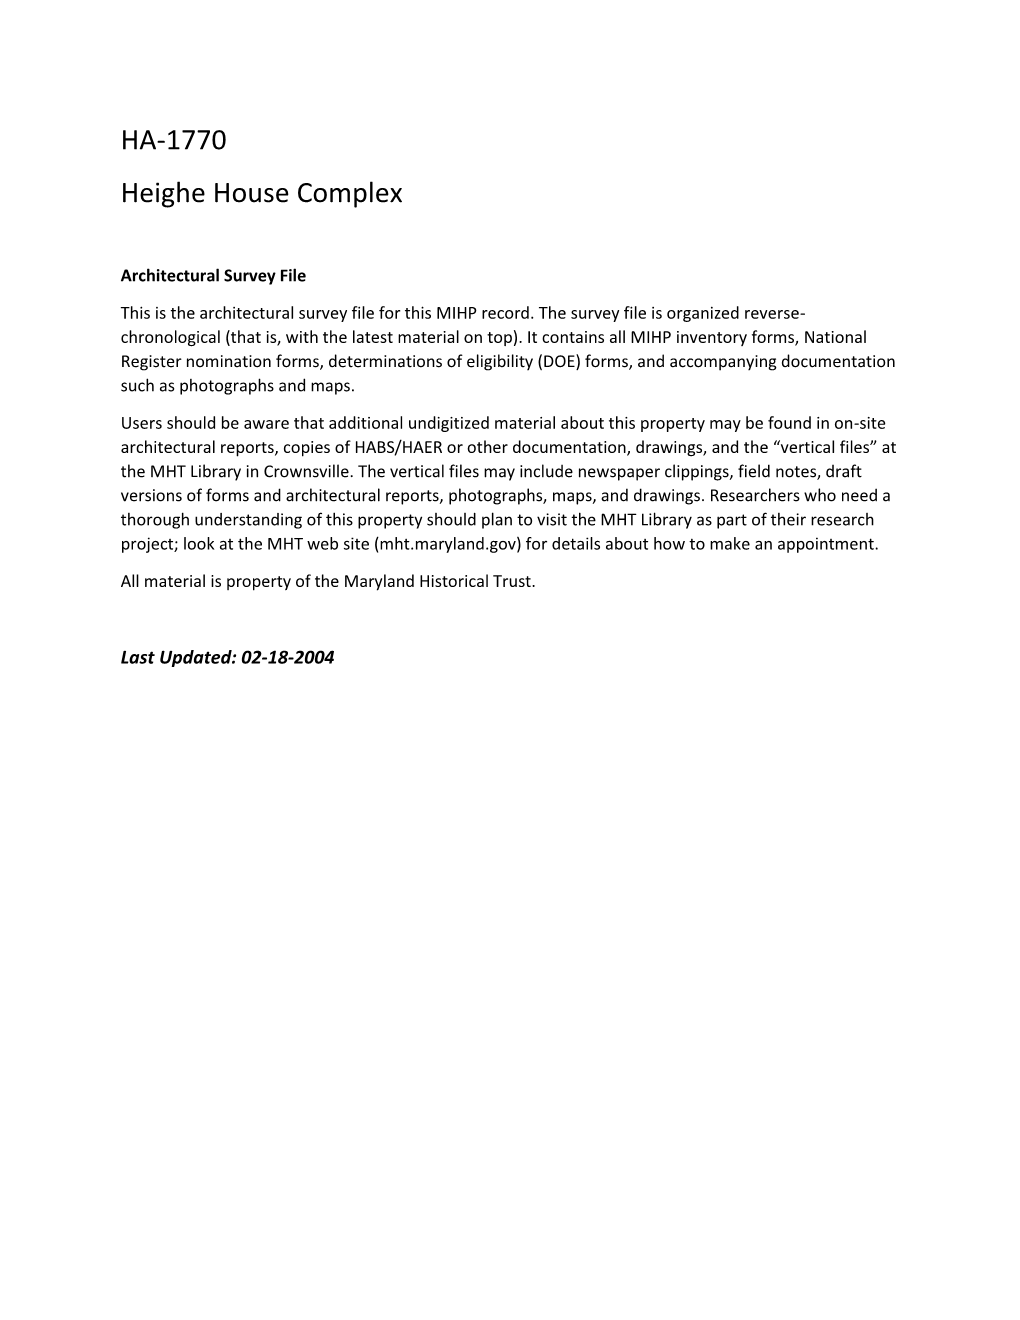 HA-1770 Heighe House Complex